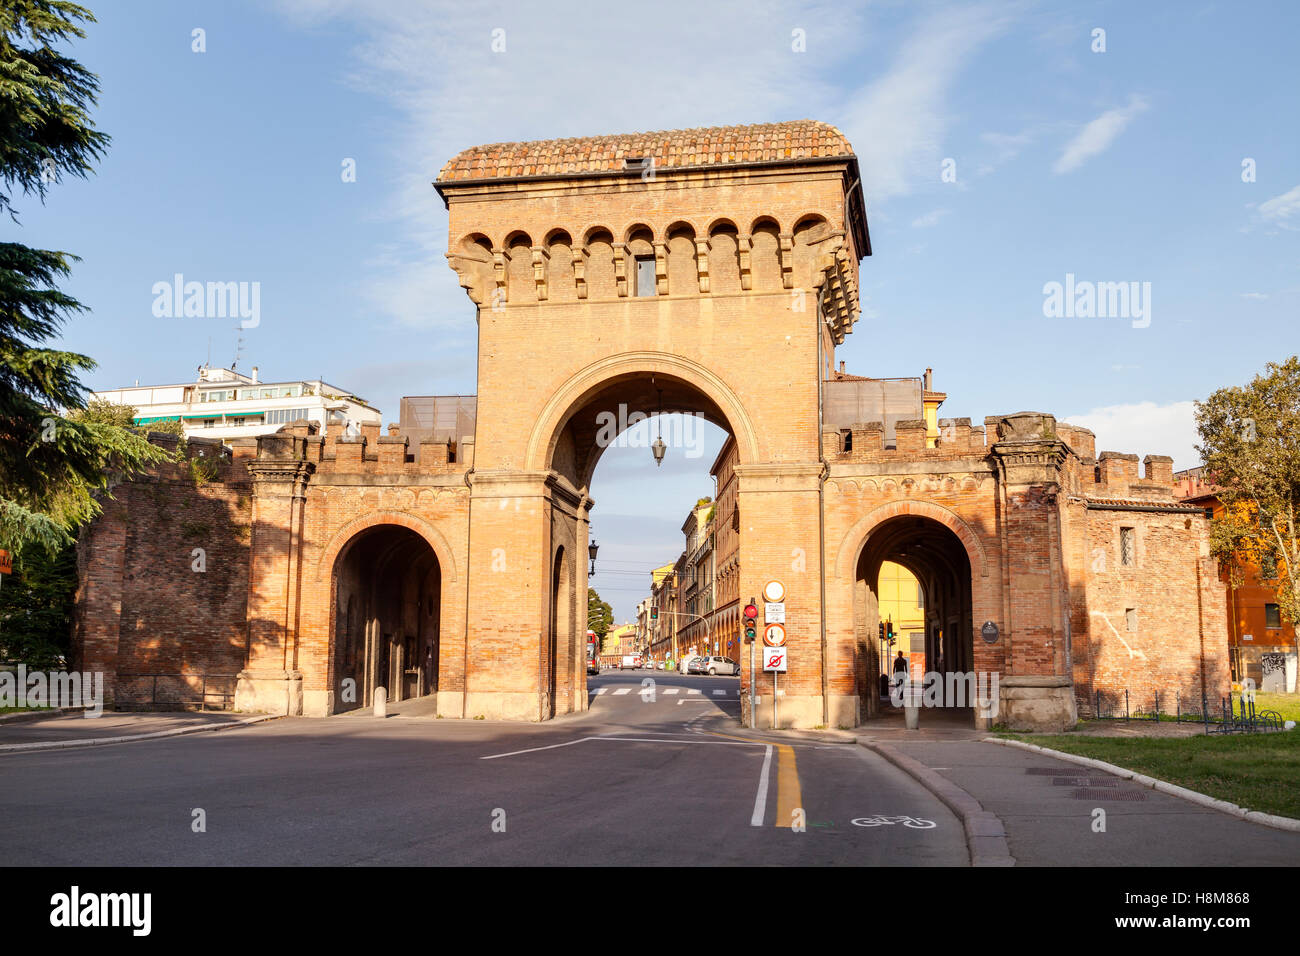 Porta saragozza bologna gate hi-res stock photography and images - Alamy